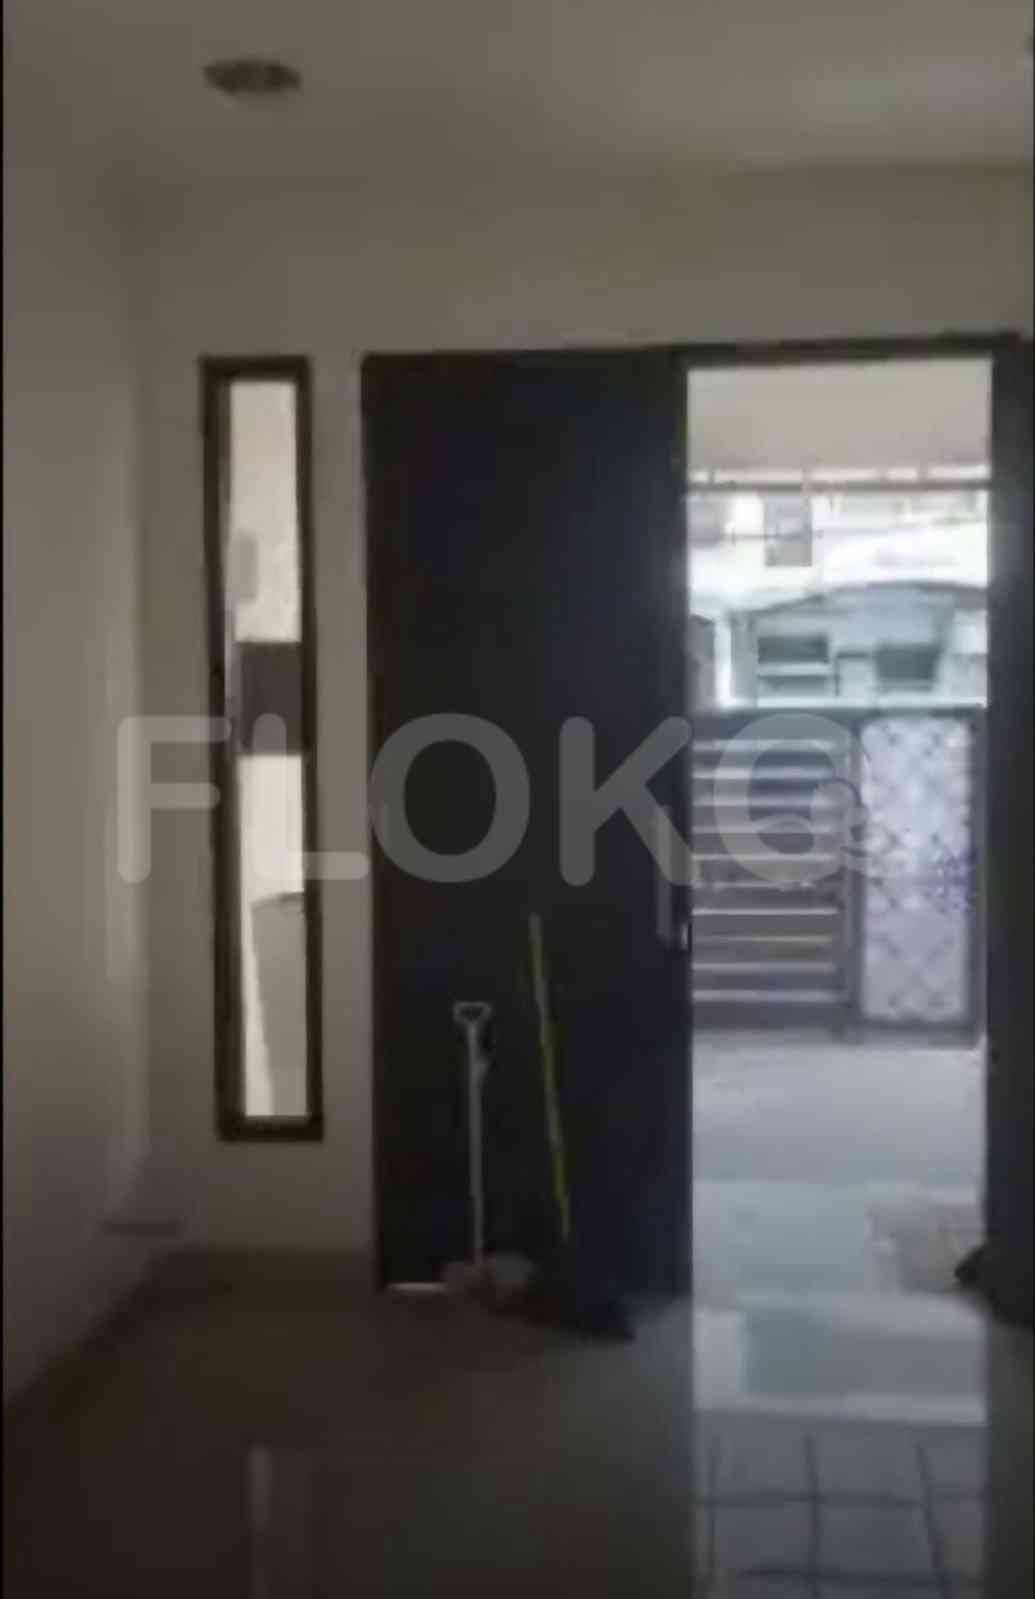 200 sqm, 4 BR house for rent in Pondok Indah, Pondok Indah 3